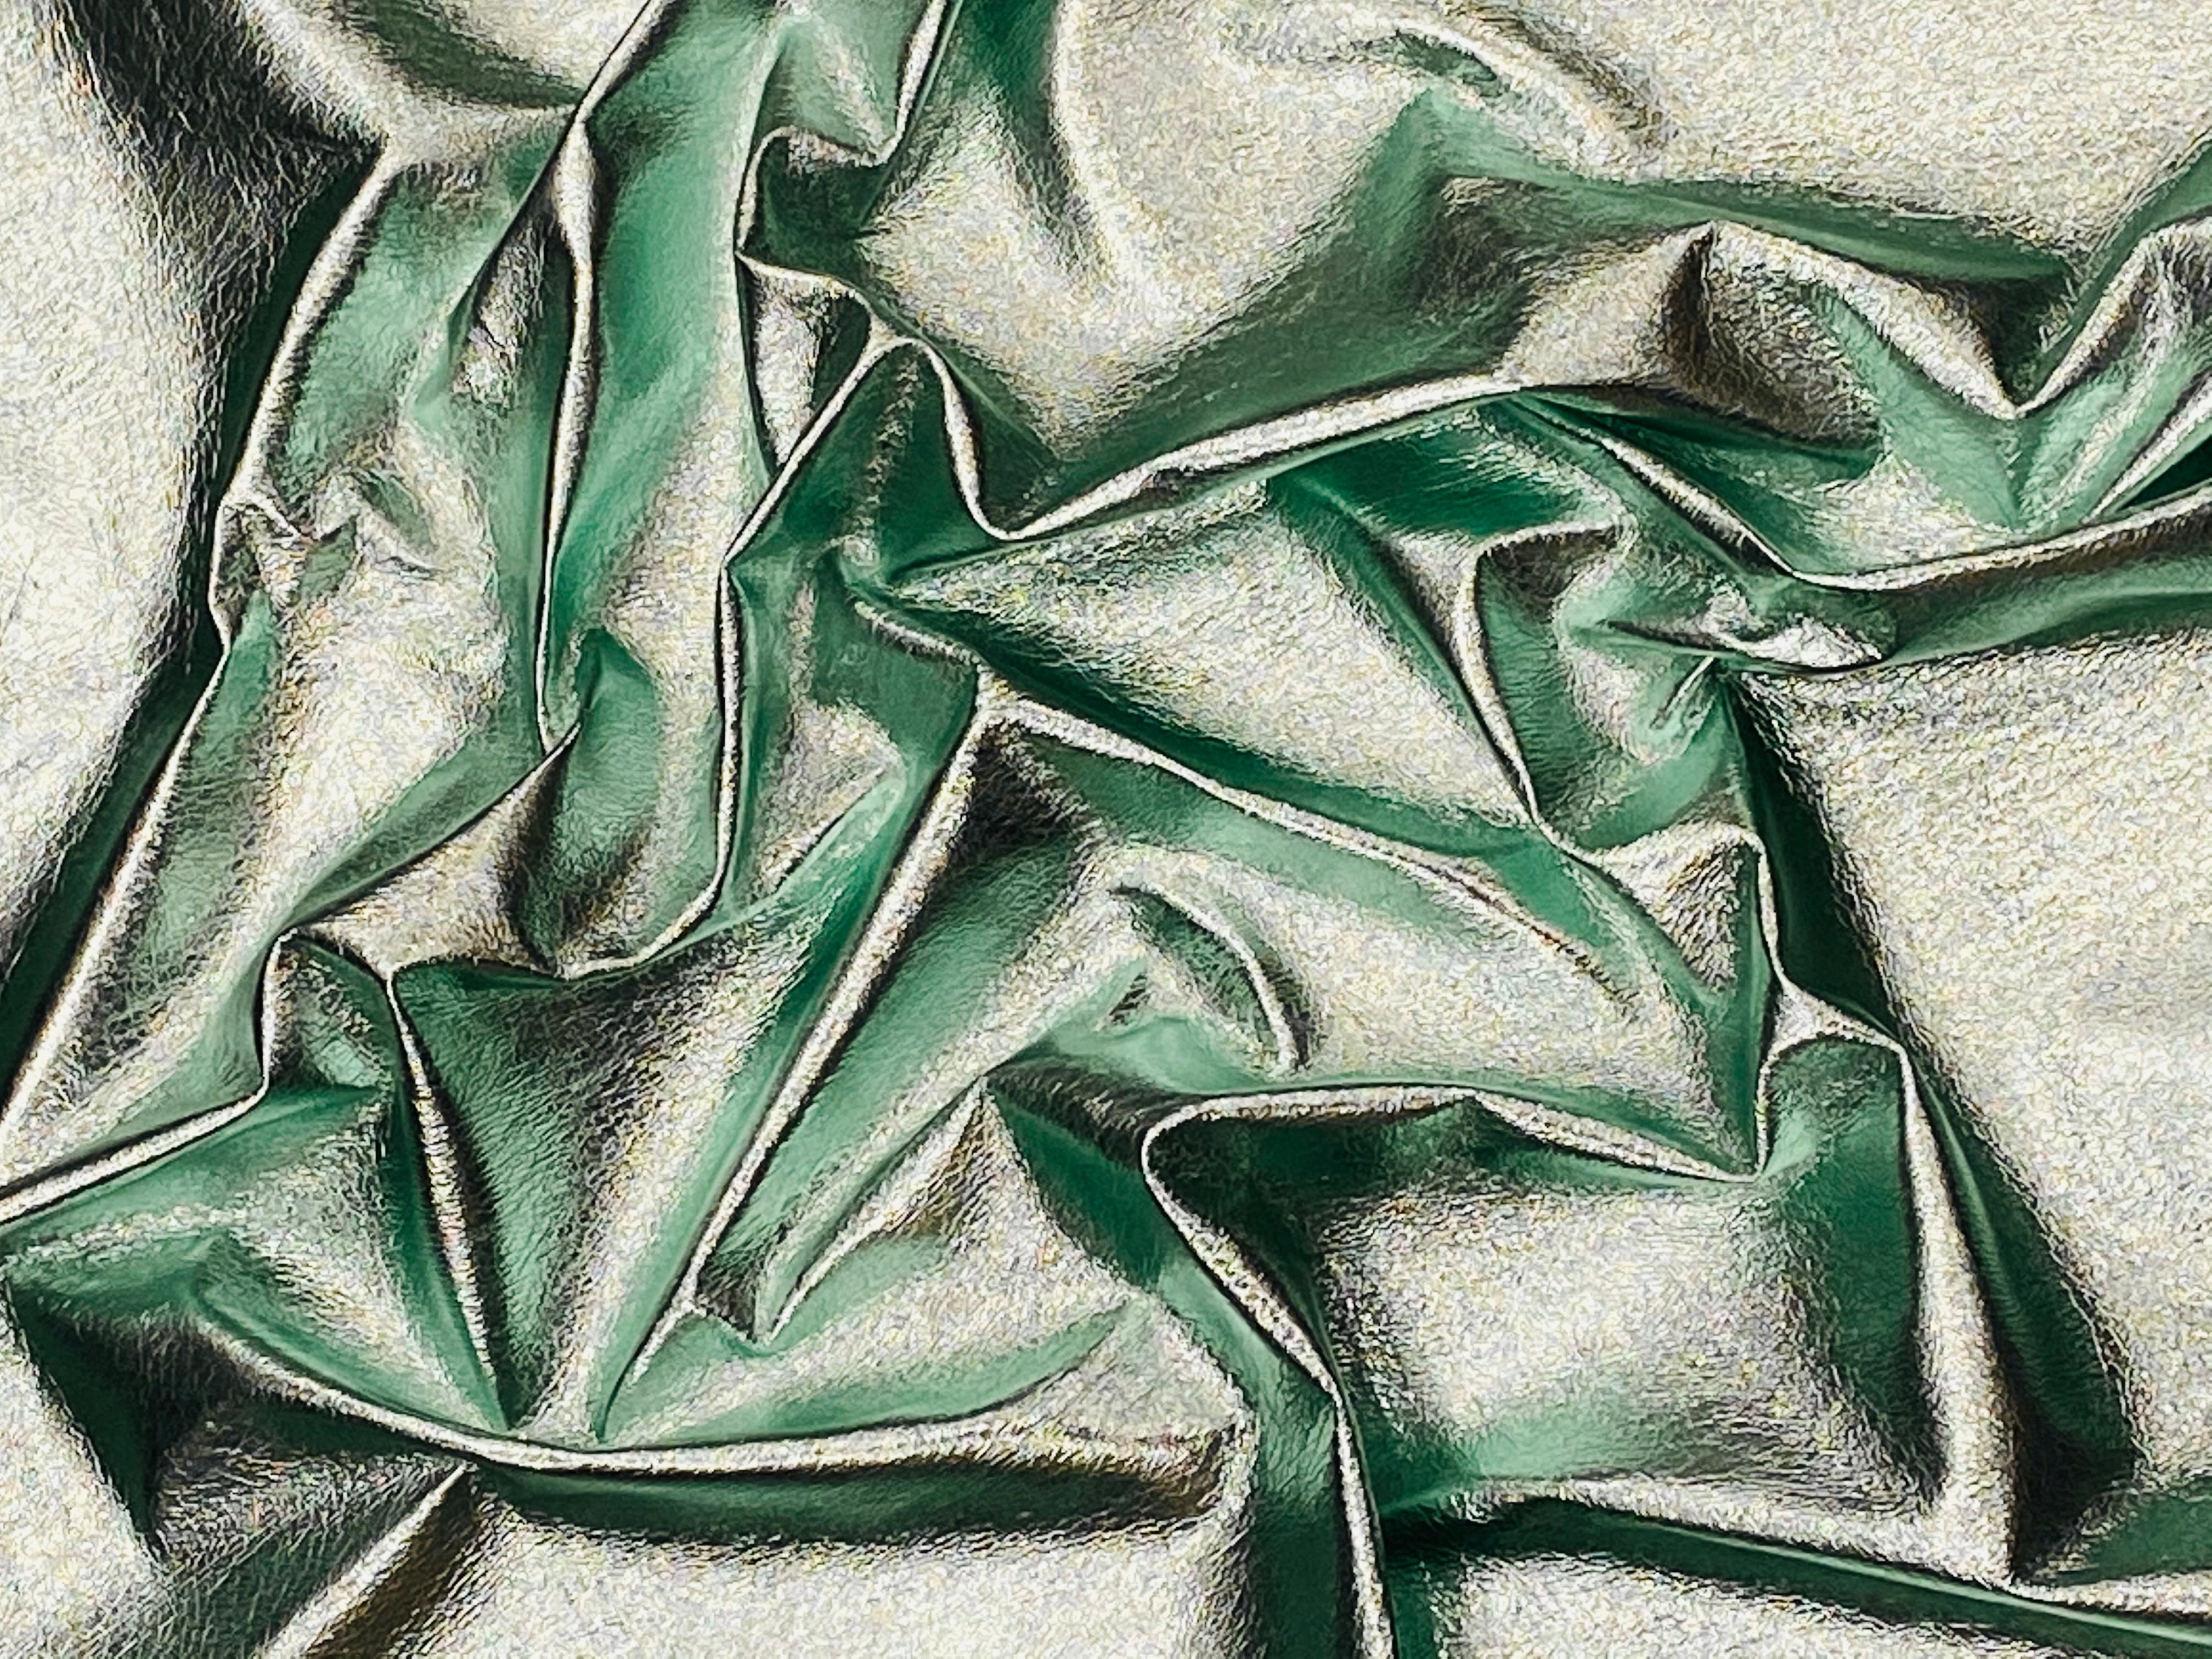 Green, Metallic Foiled Leather Pig Skin: (0.6-0.7mm 1.5oz) 15